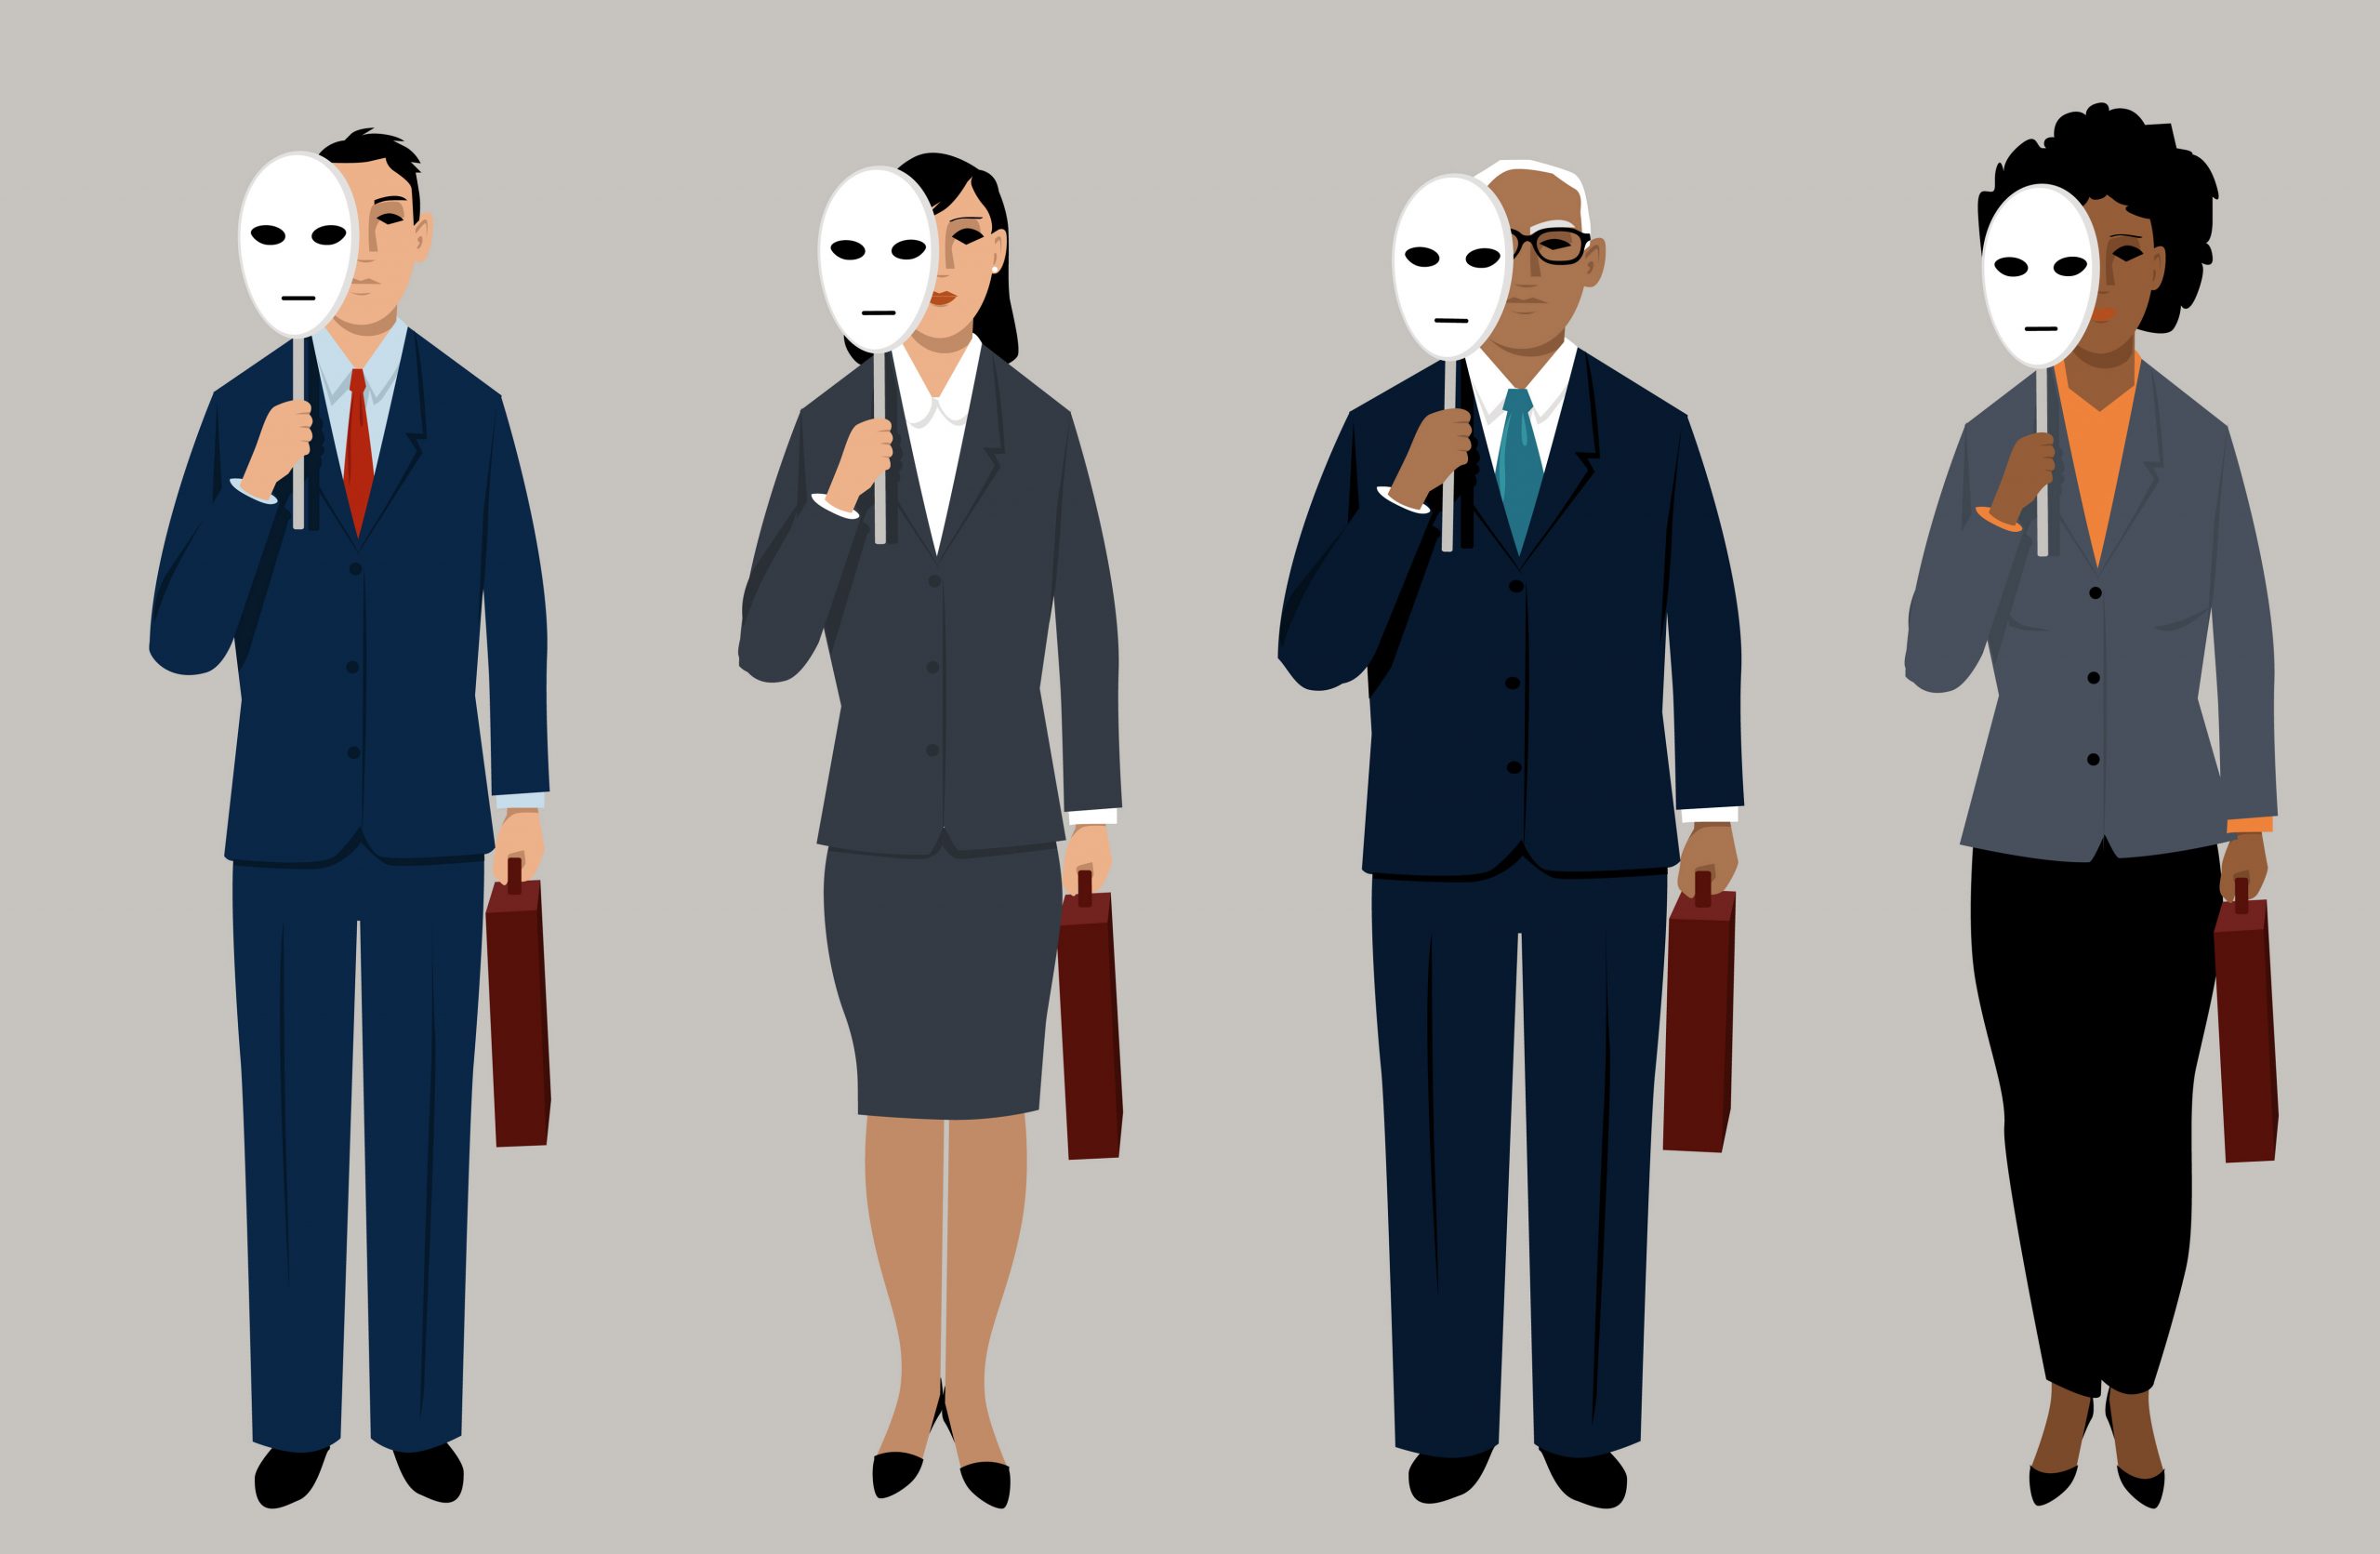 Illustration of four professionals holding masks, representing unconscious bias.